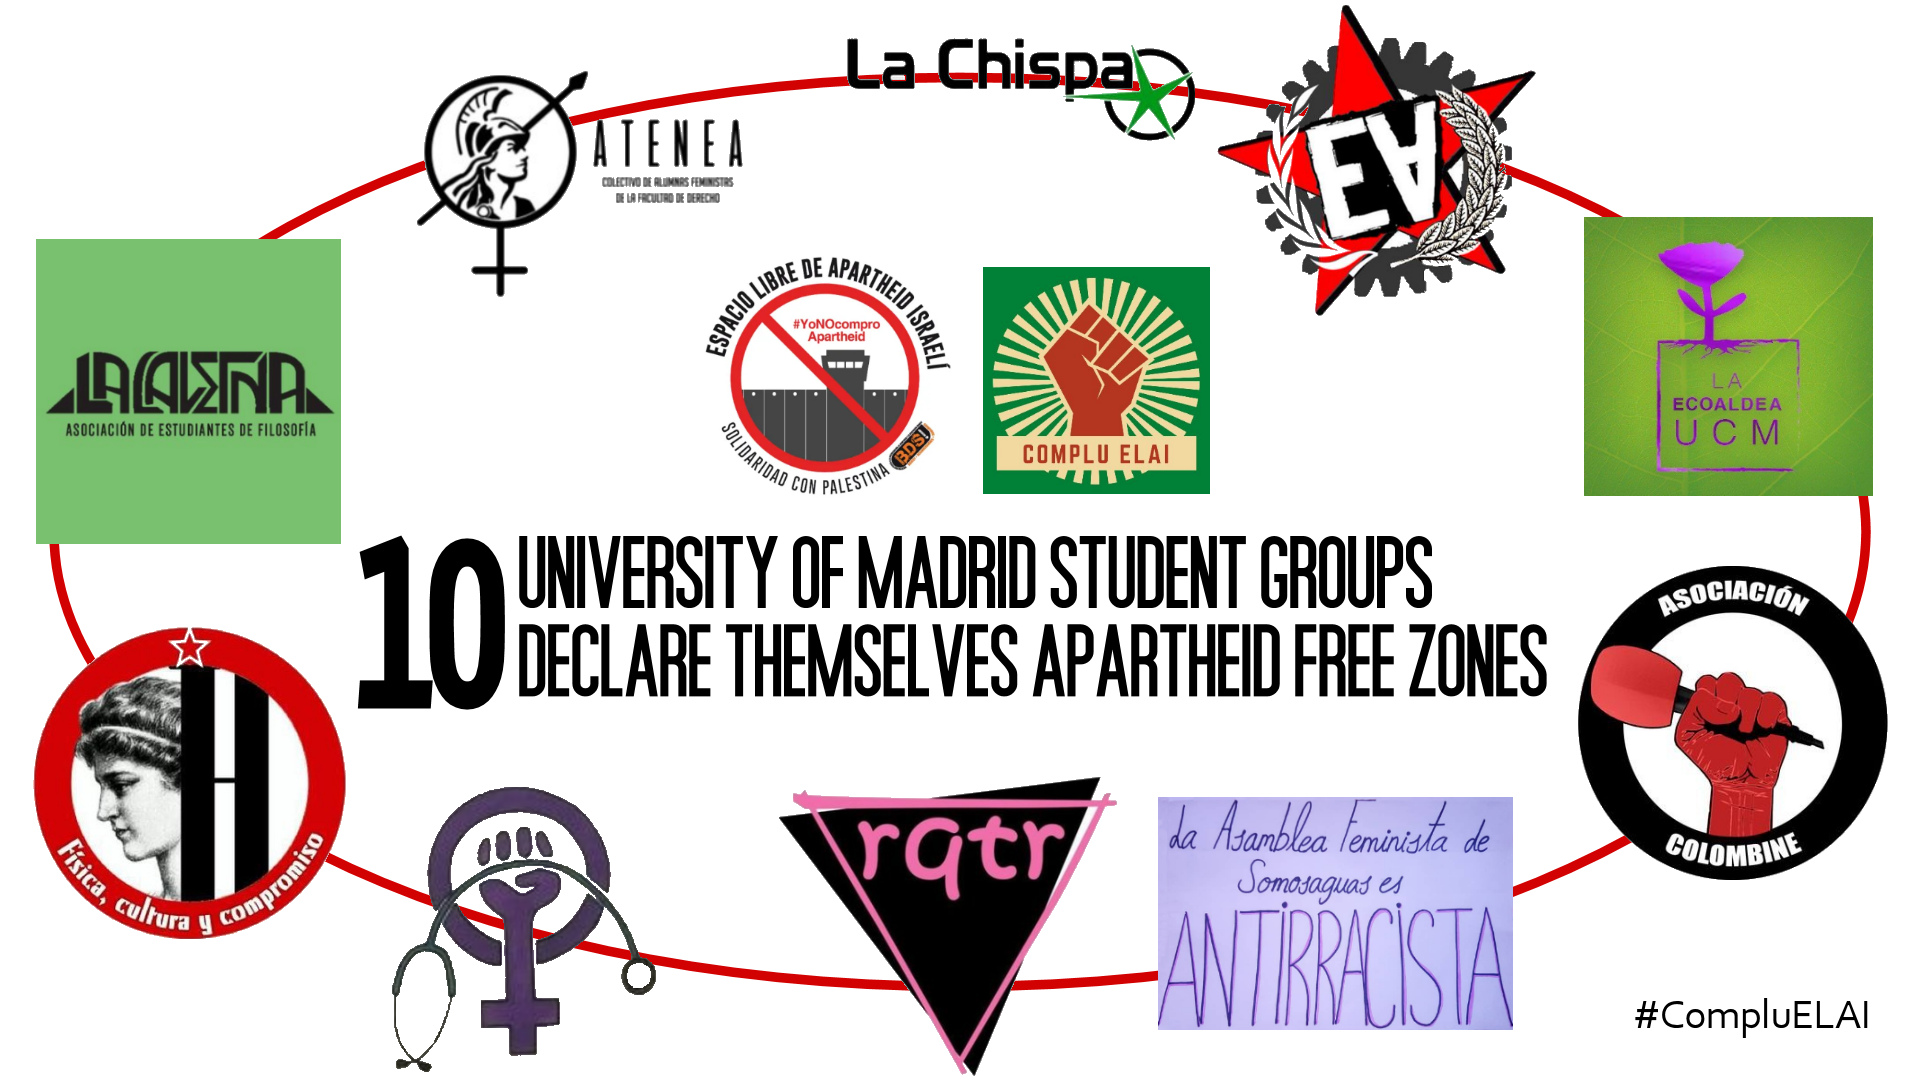 Ten Student Groups From University of Madrid Declare Themselves Apartheid Free Zones